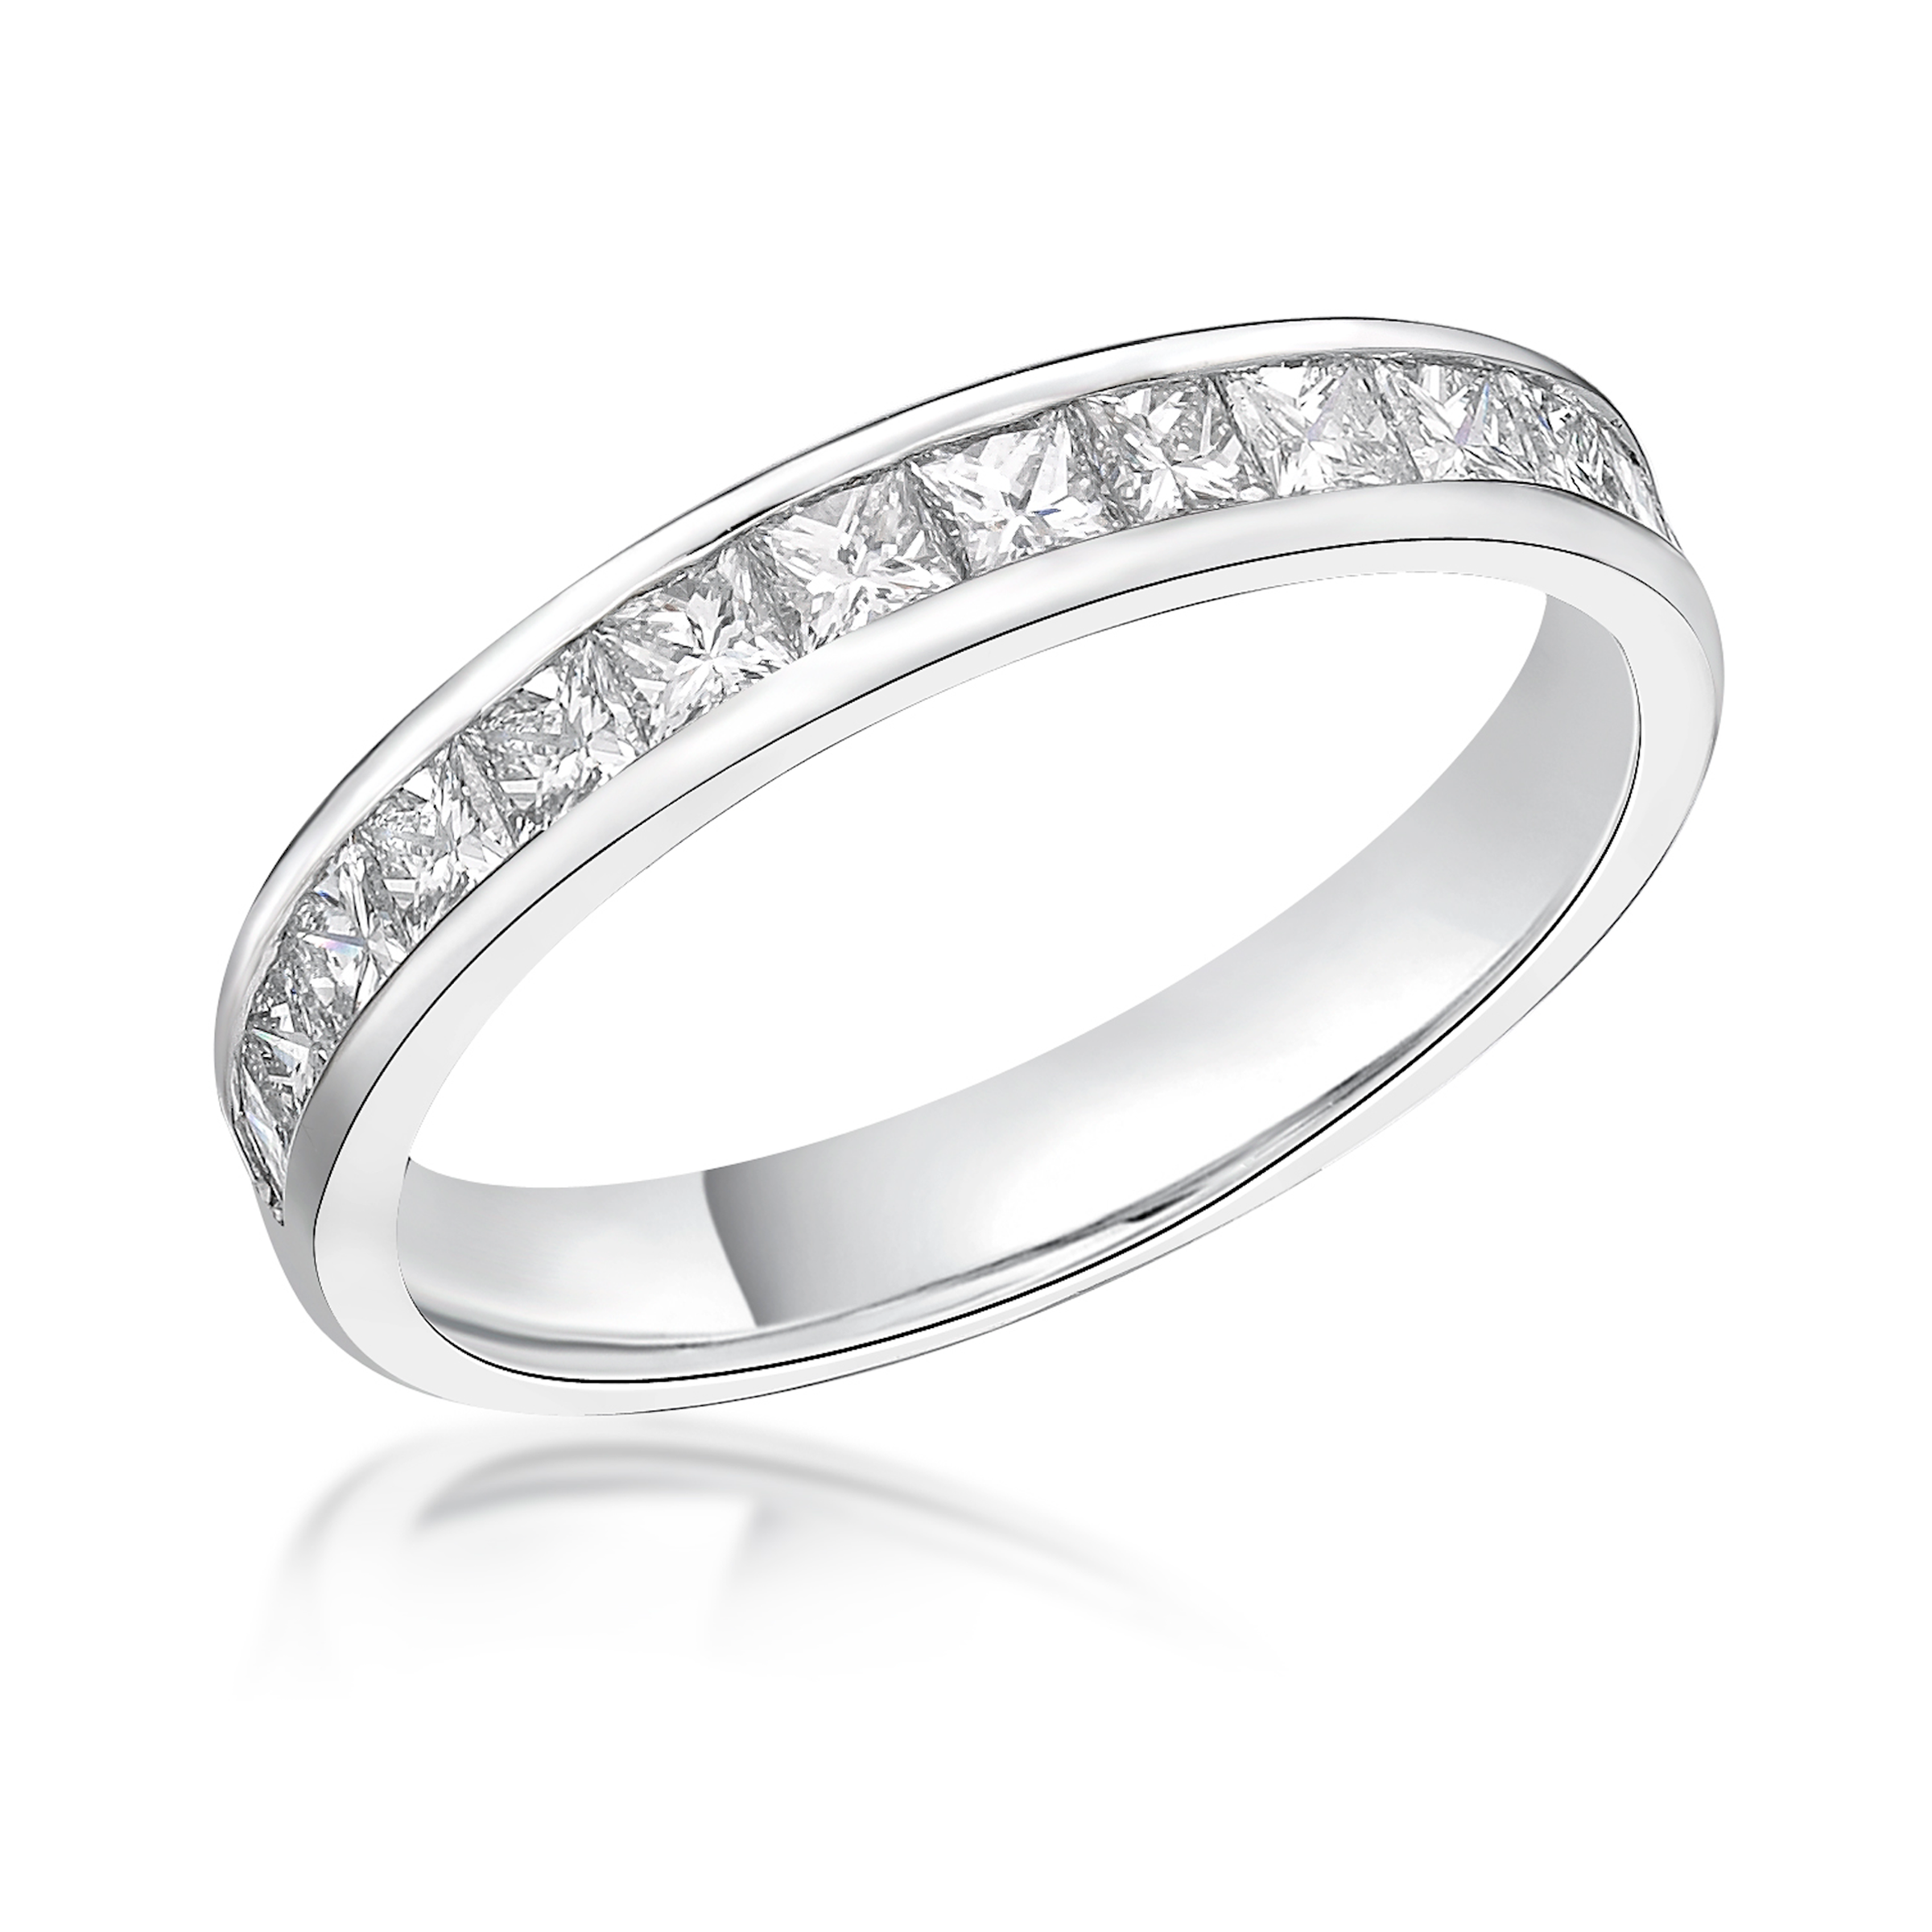 PRINCESS CHANNEL SET DIAMOND WEDDING ETERNITY RING